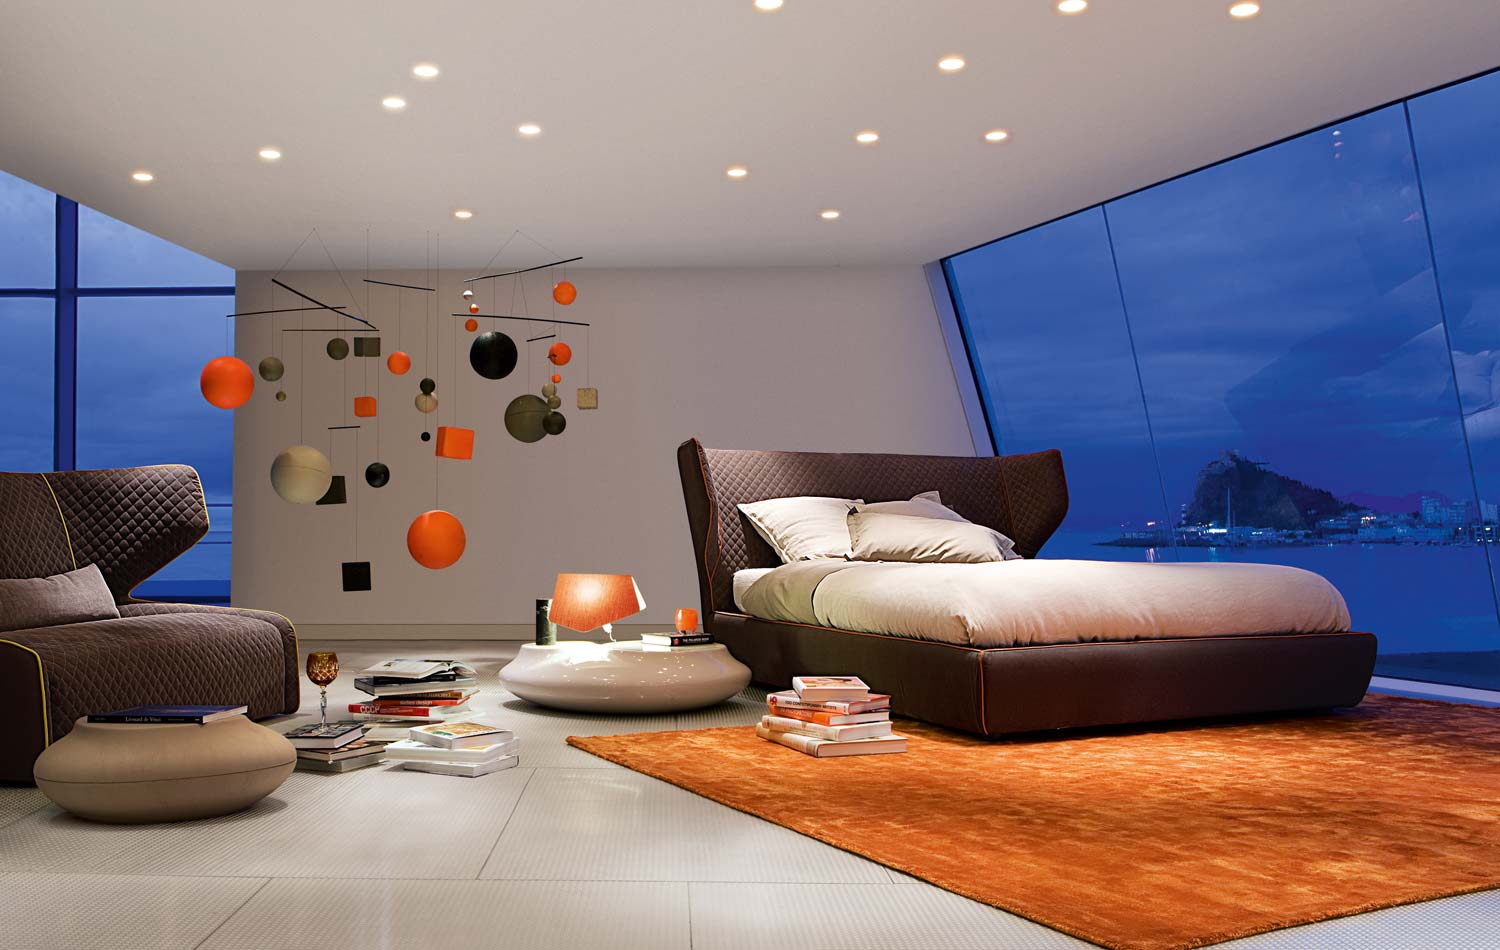 roche bobois bedroom modern bedrooms beds inspiration courtesy